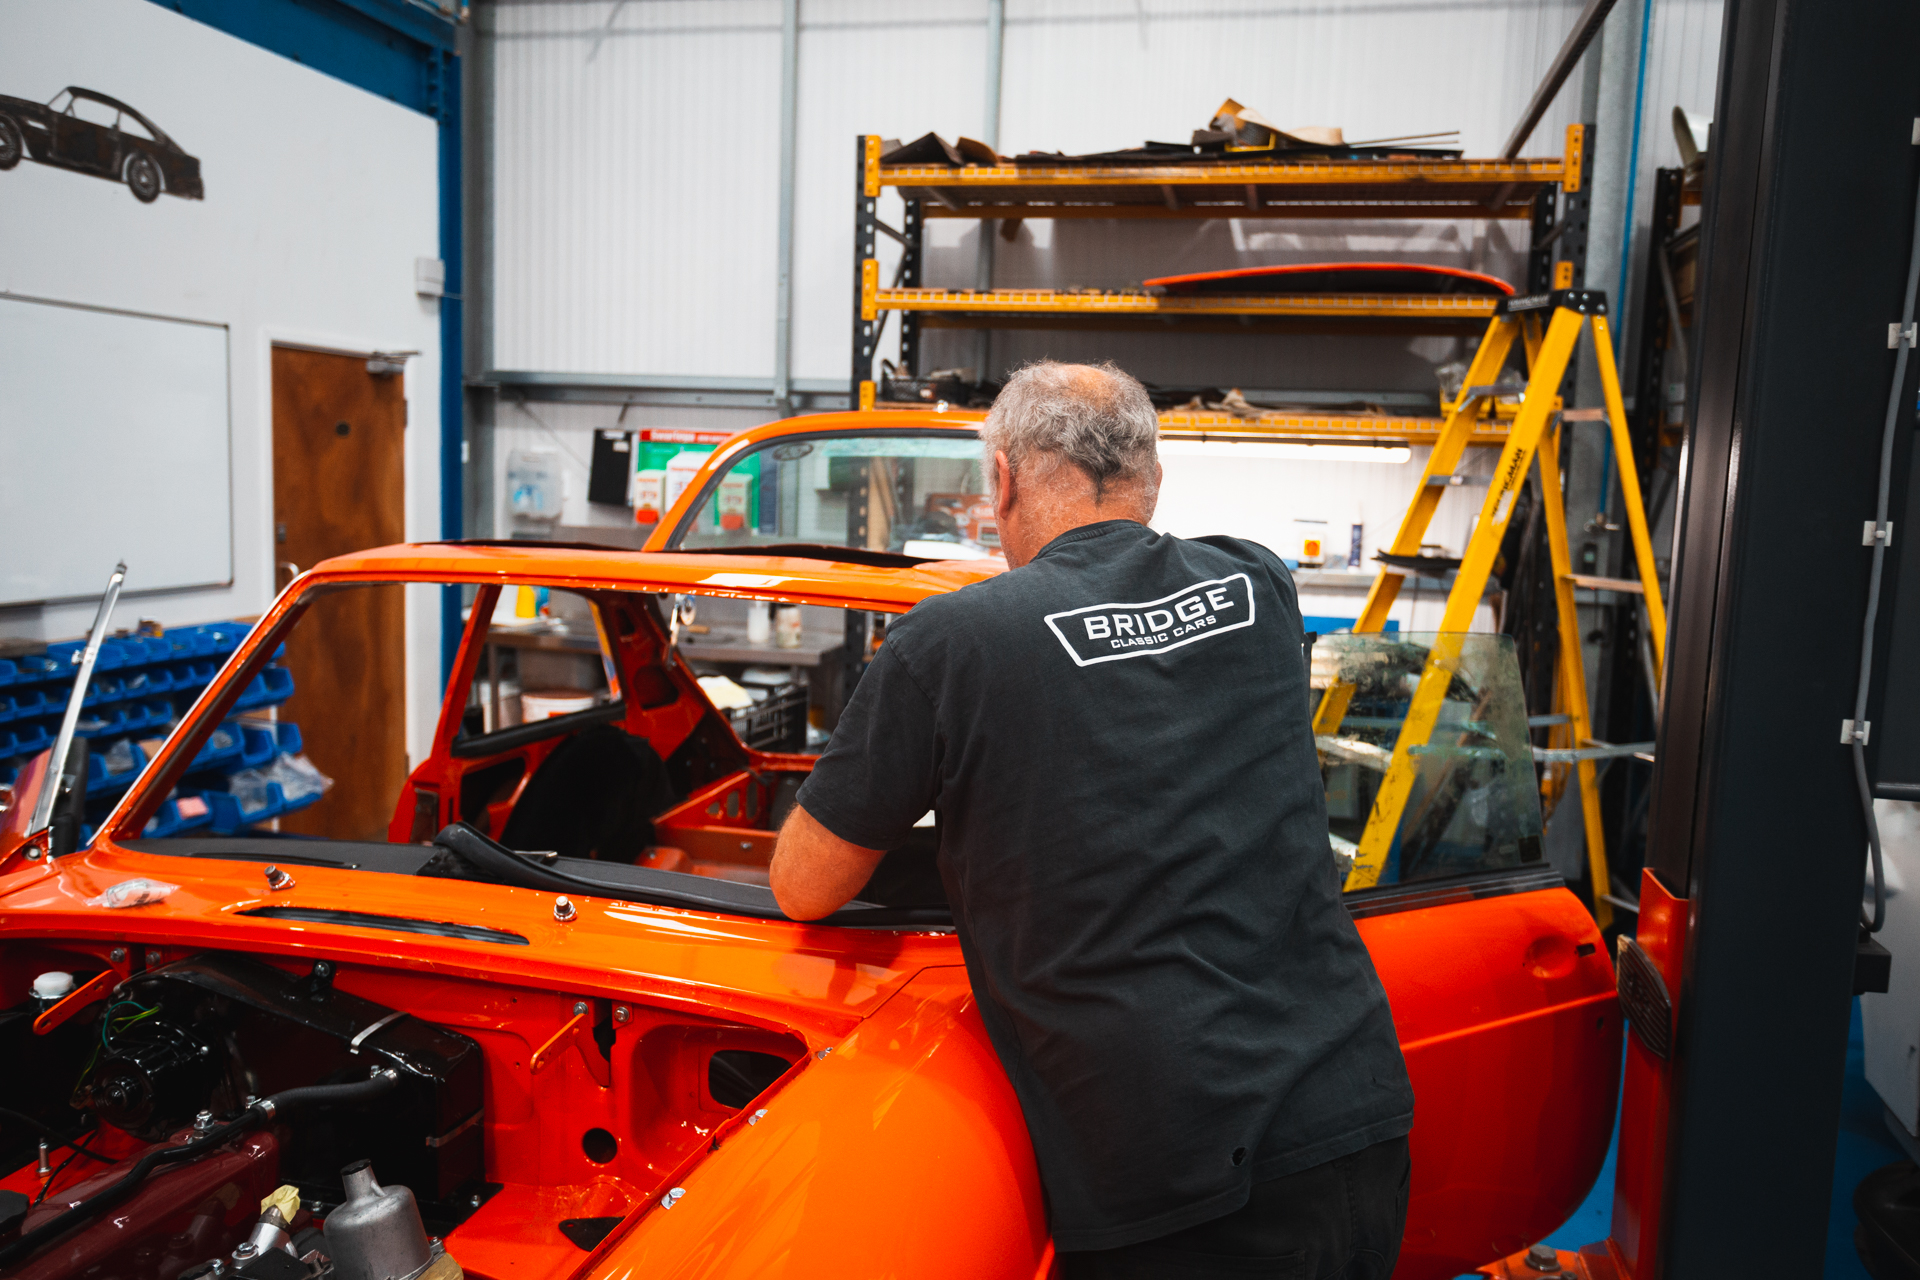 A classic car technician working on an MG B GT